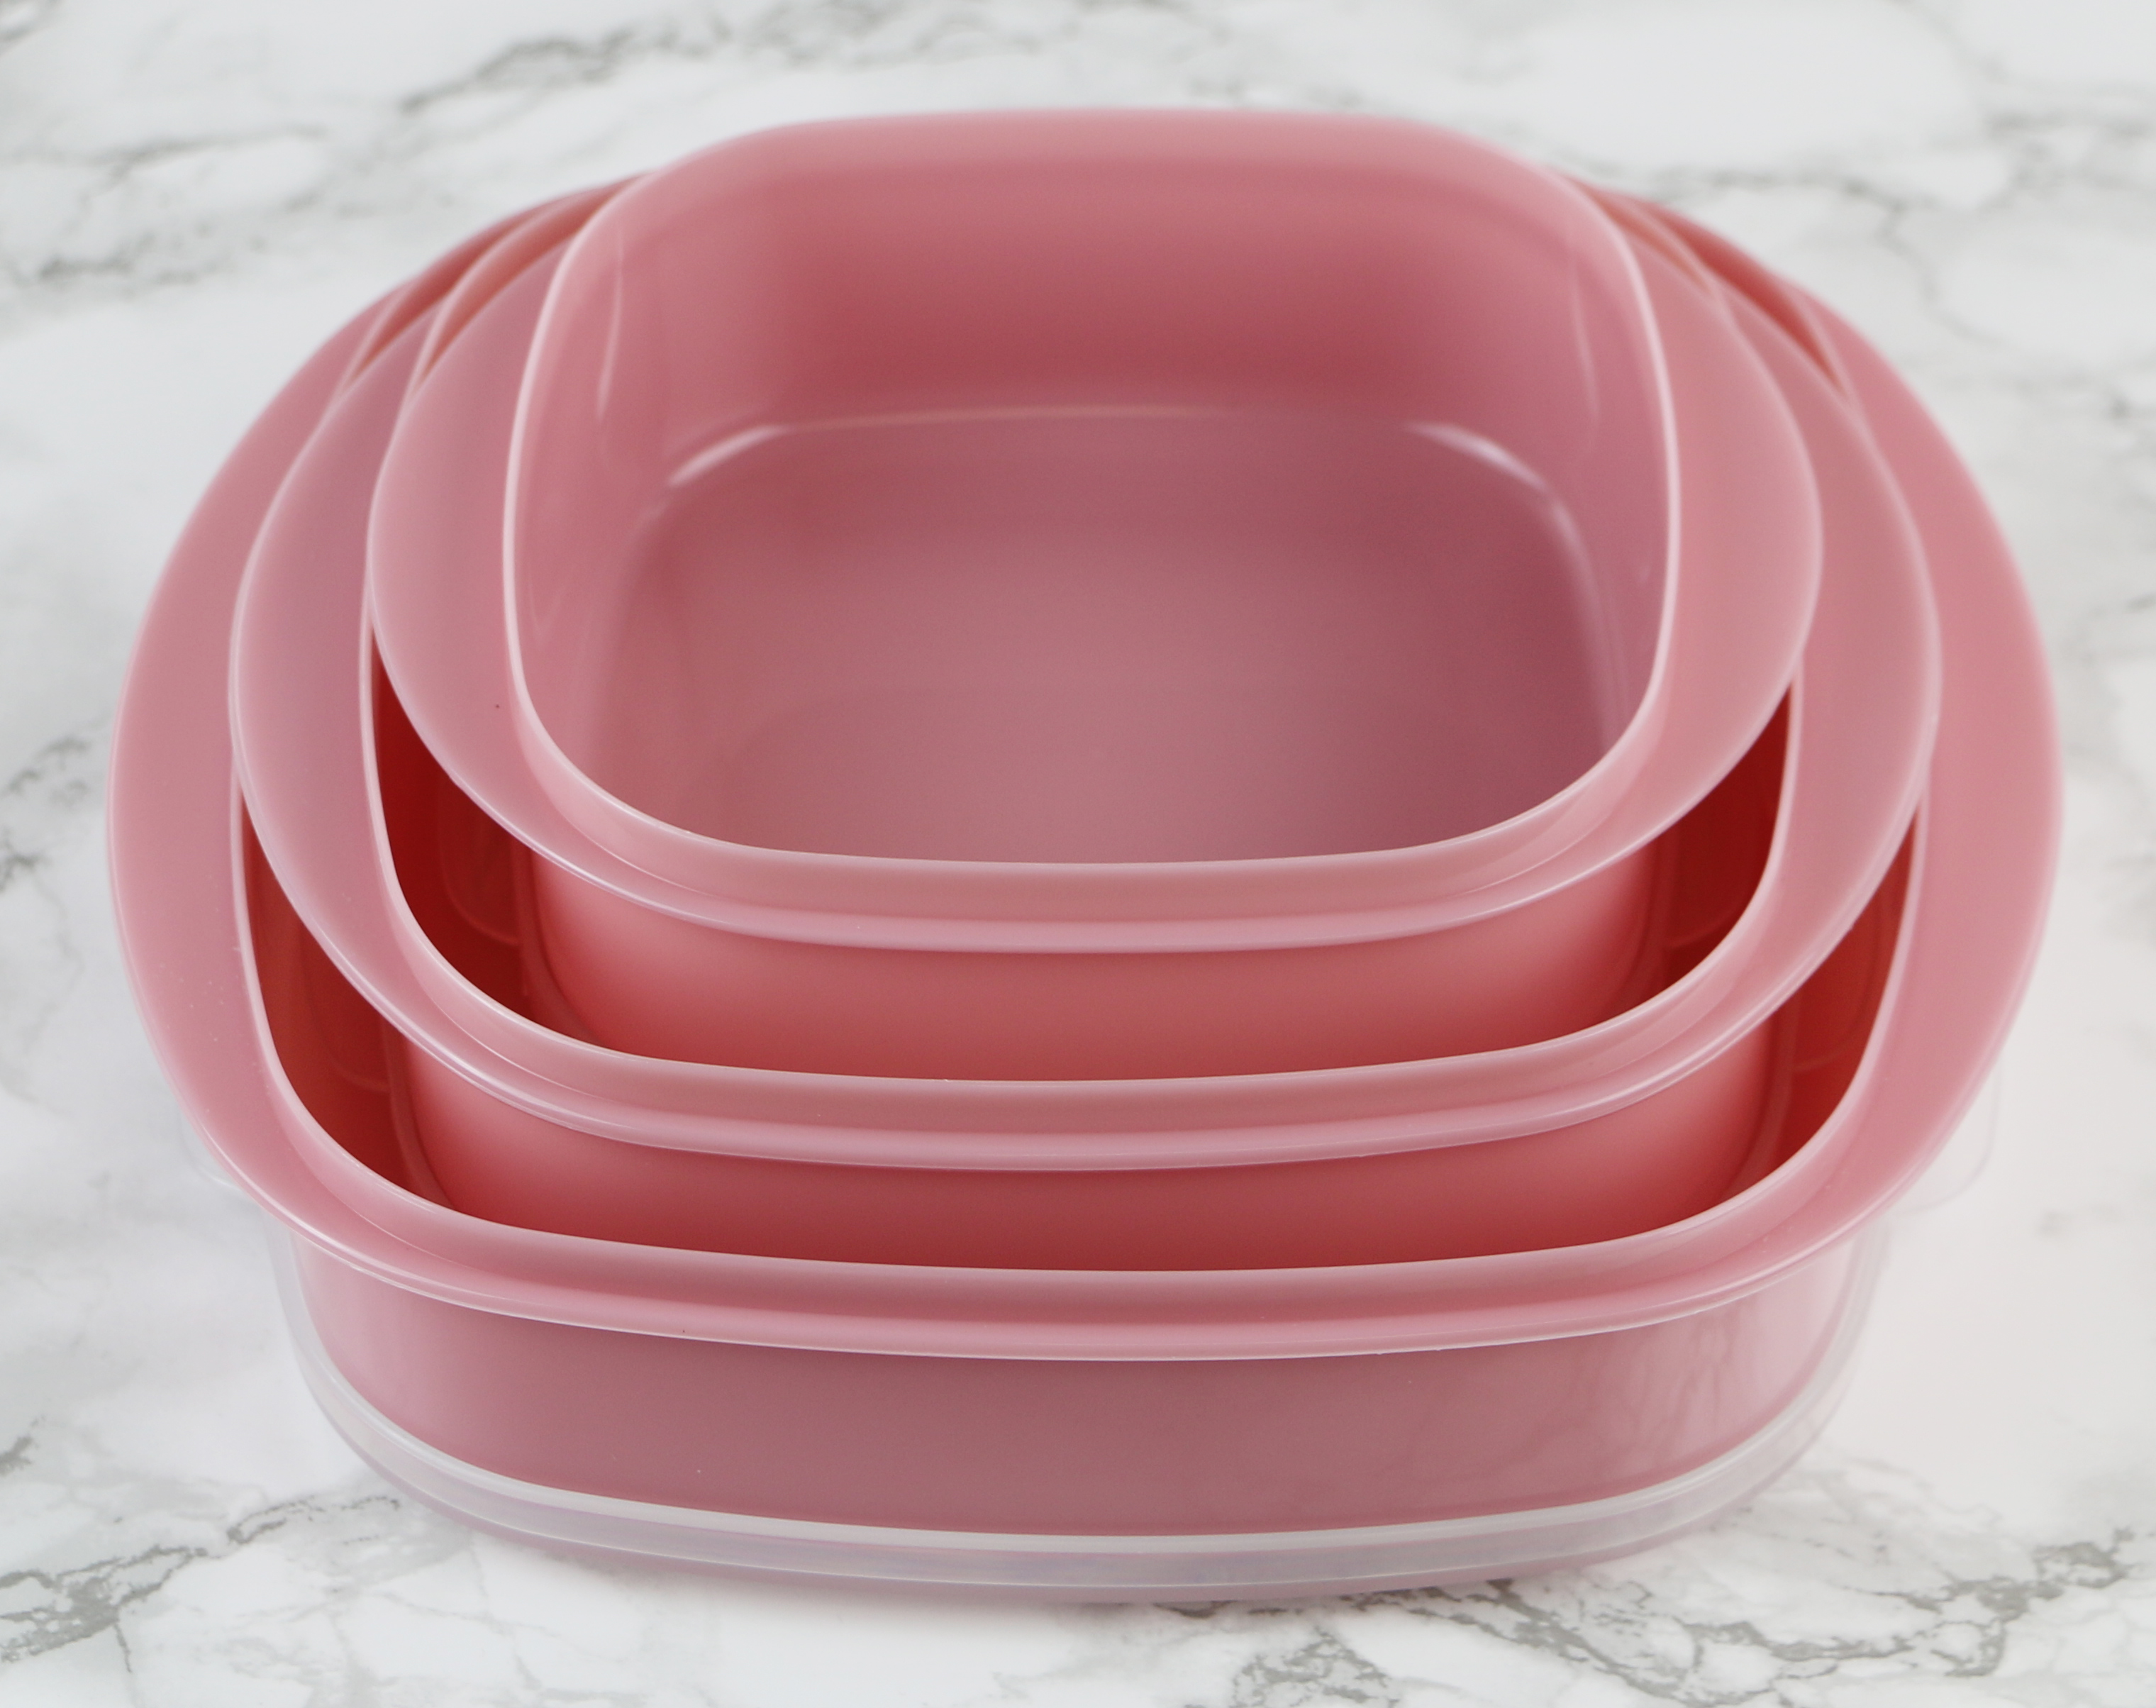 Calypso Basics, Microwave Cookware/ Storage Set, Pink - image 3 of 4